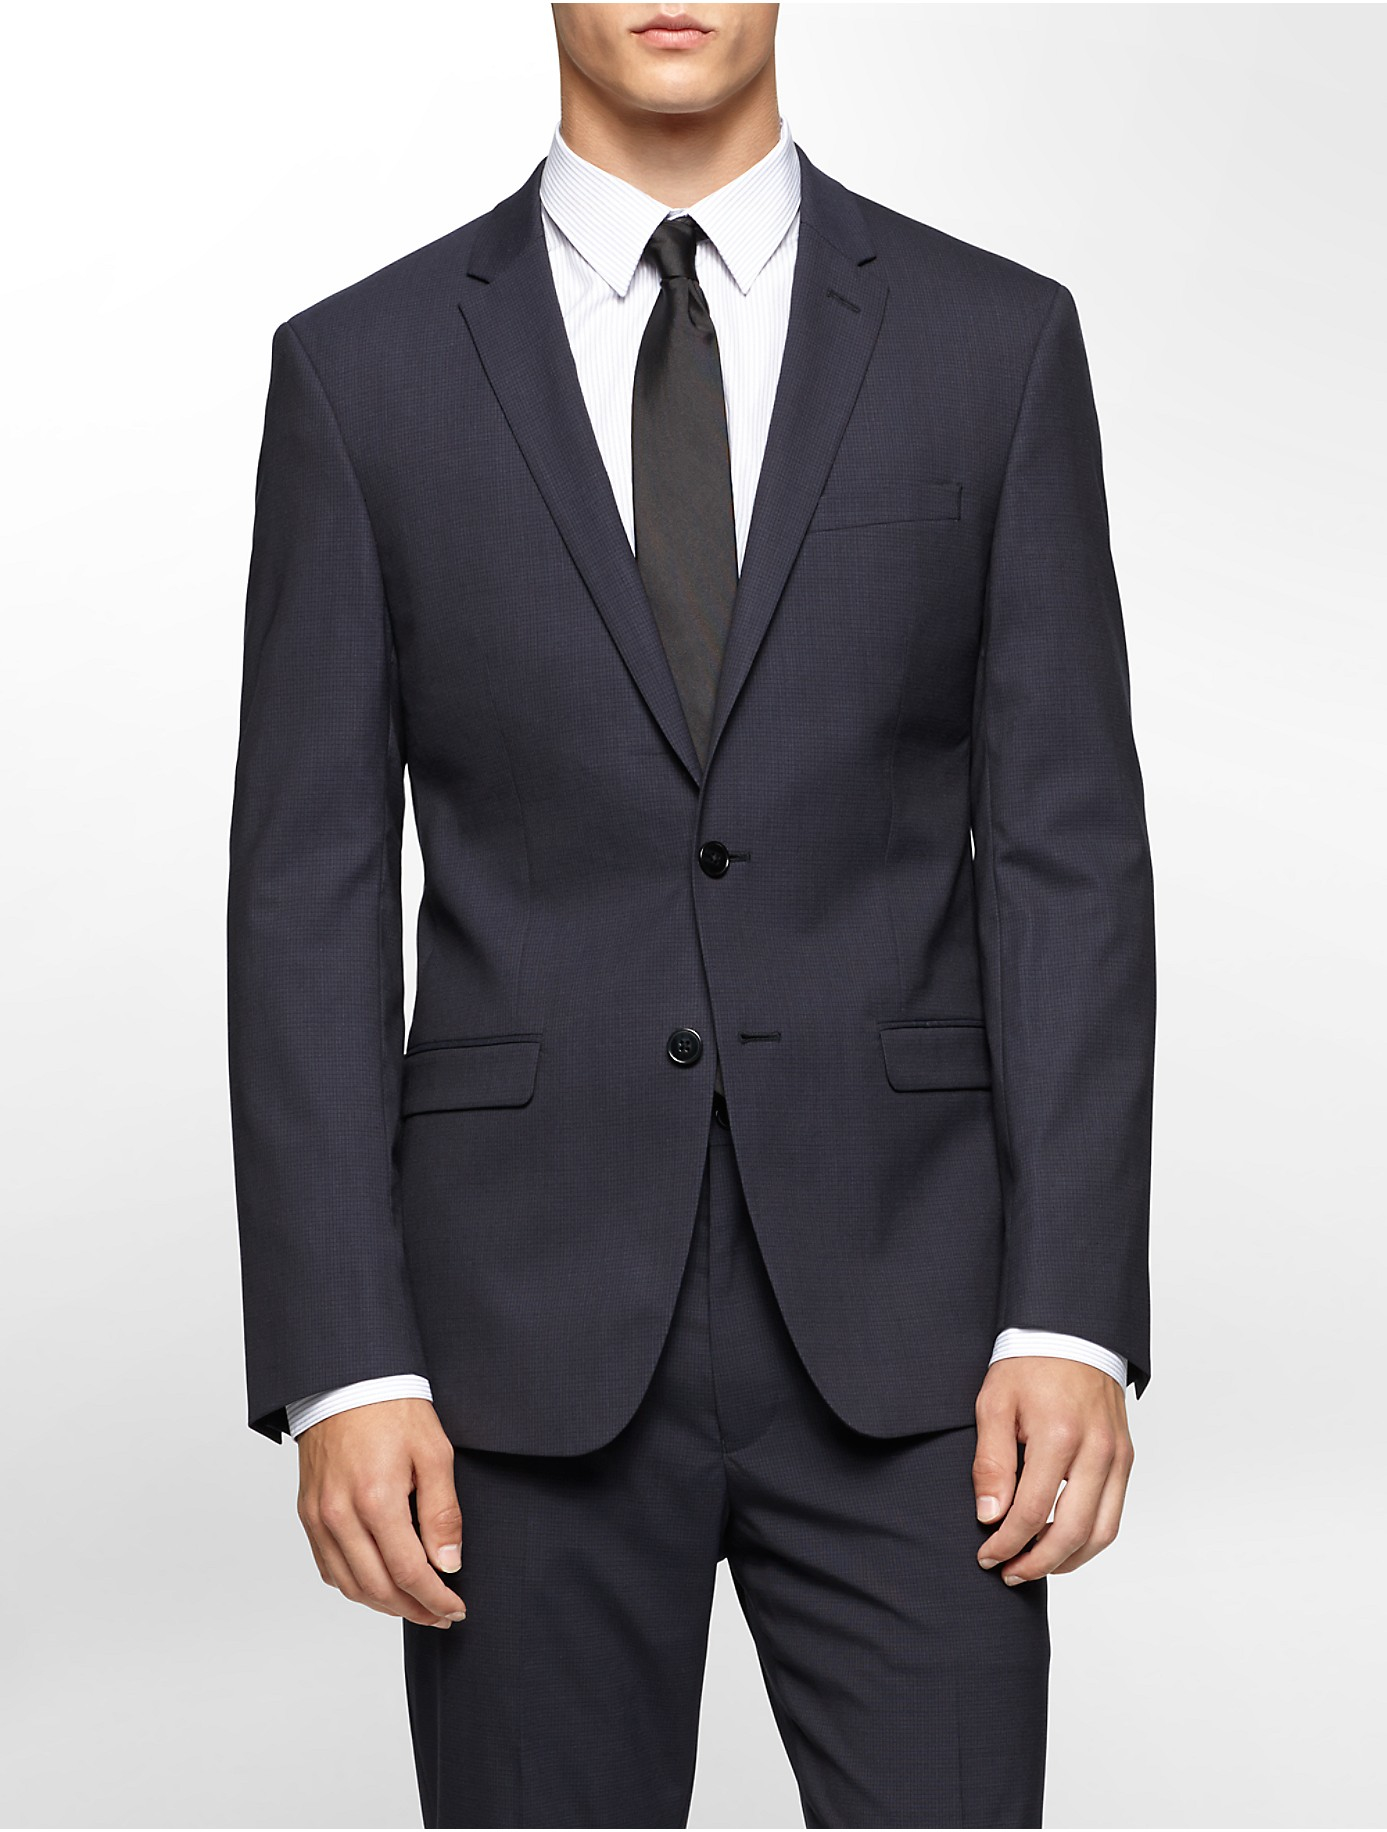 Lyst - Calvin Klein X Fit Ultra Slim Fit Navy Grid Suit Jacket in Blue